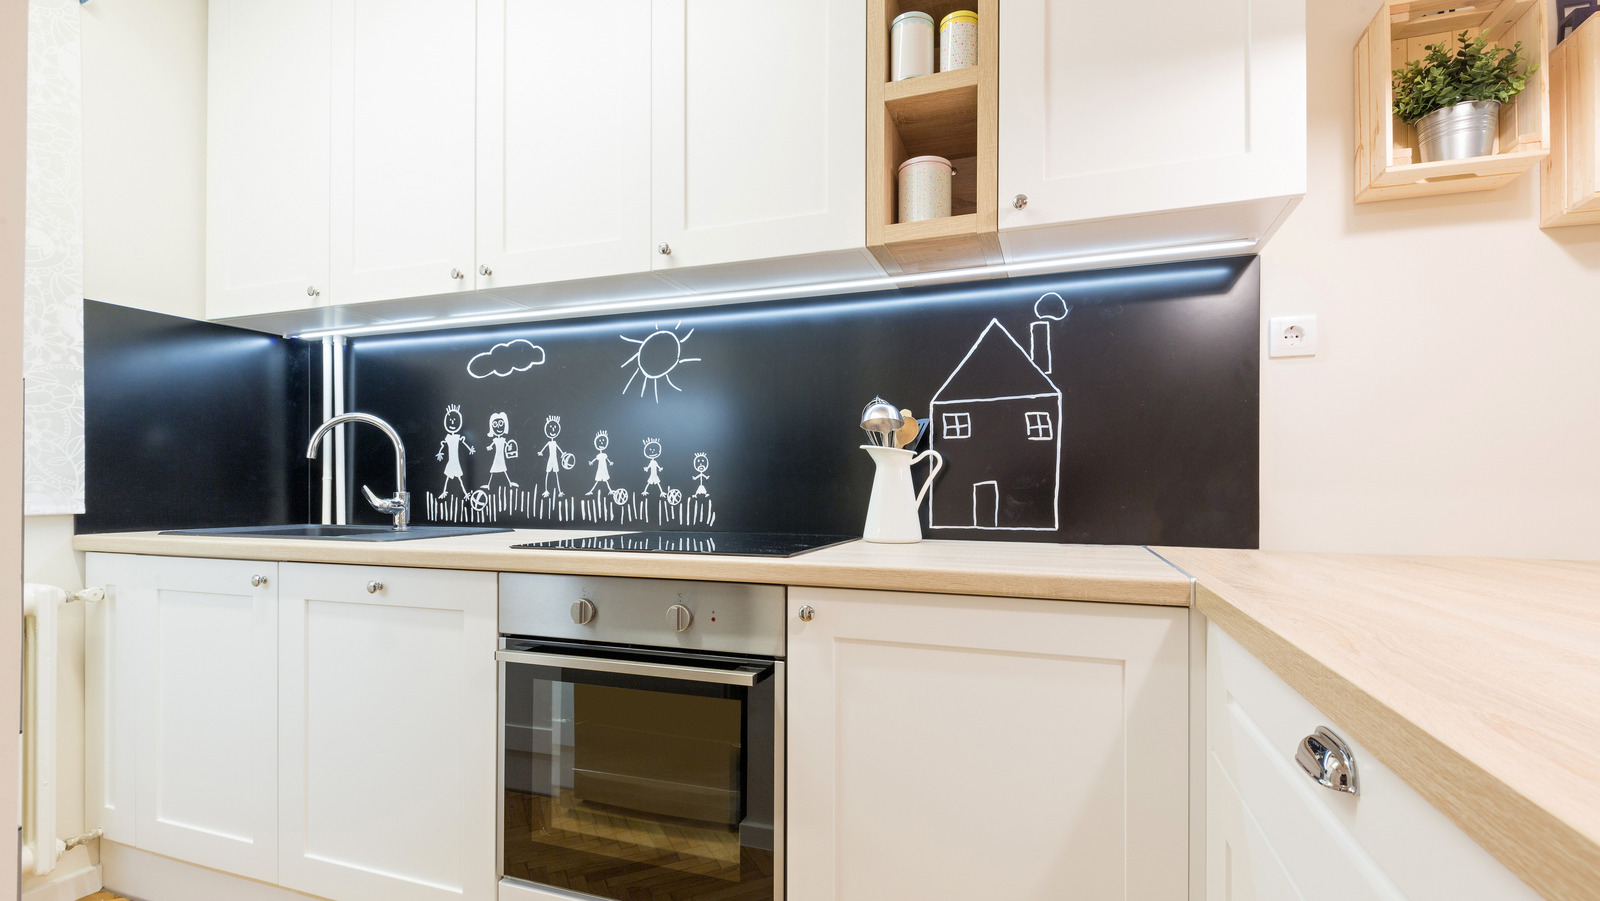 46 Beautiful Kitchen Backsplash Ideas for Every Style and Budget  Kitchen  backsplash designs, Glass backsplash kitchen, Modern kitchen backsplash